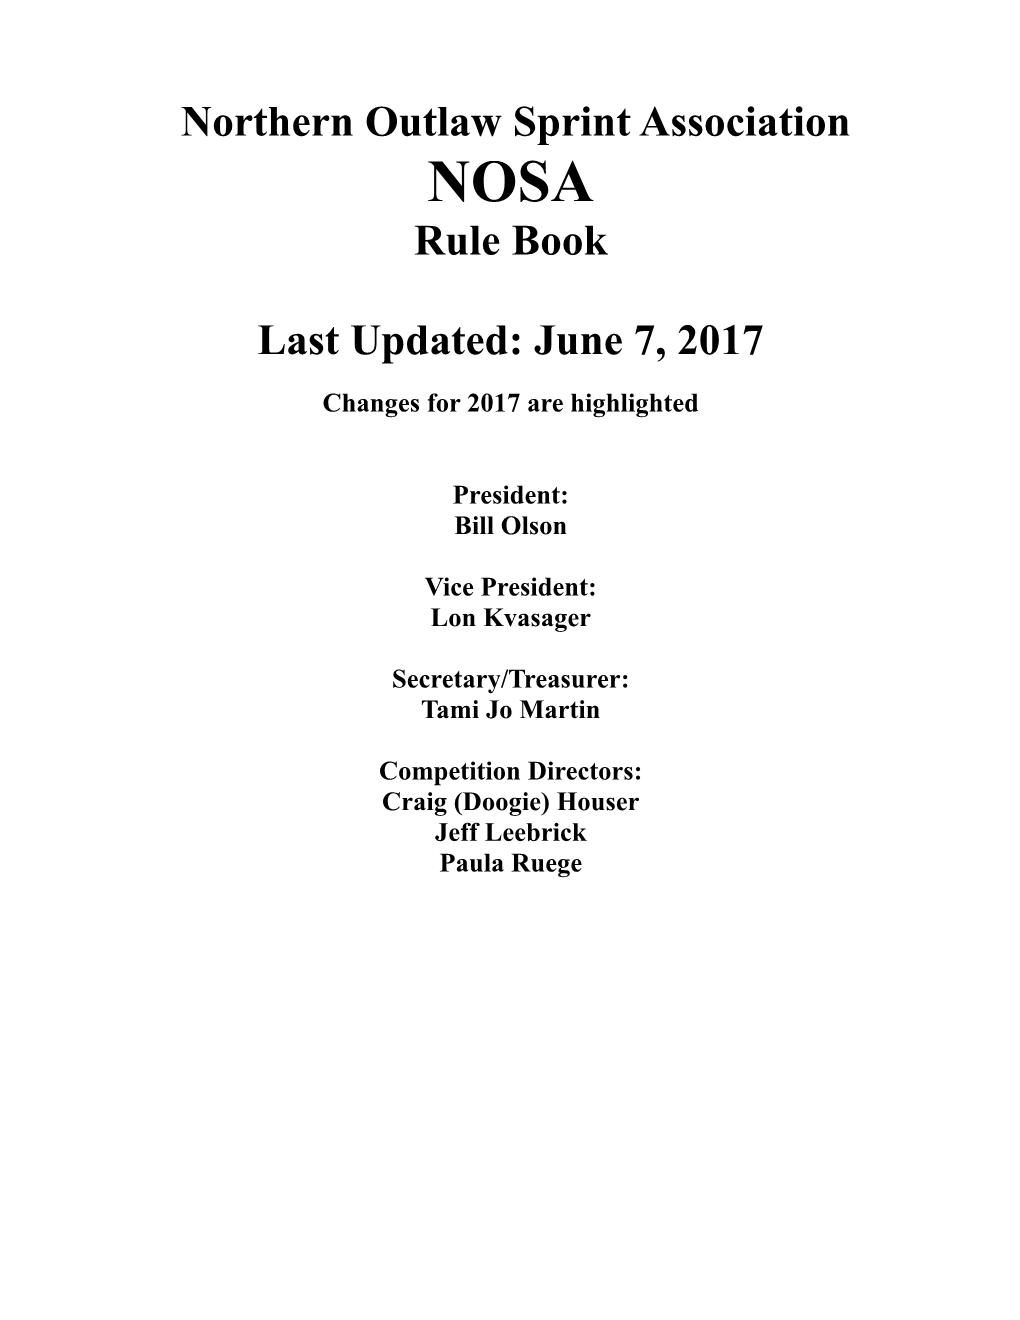 Northern Outlaw Sprint Association NOSA